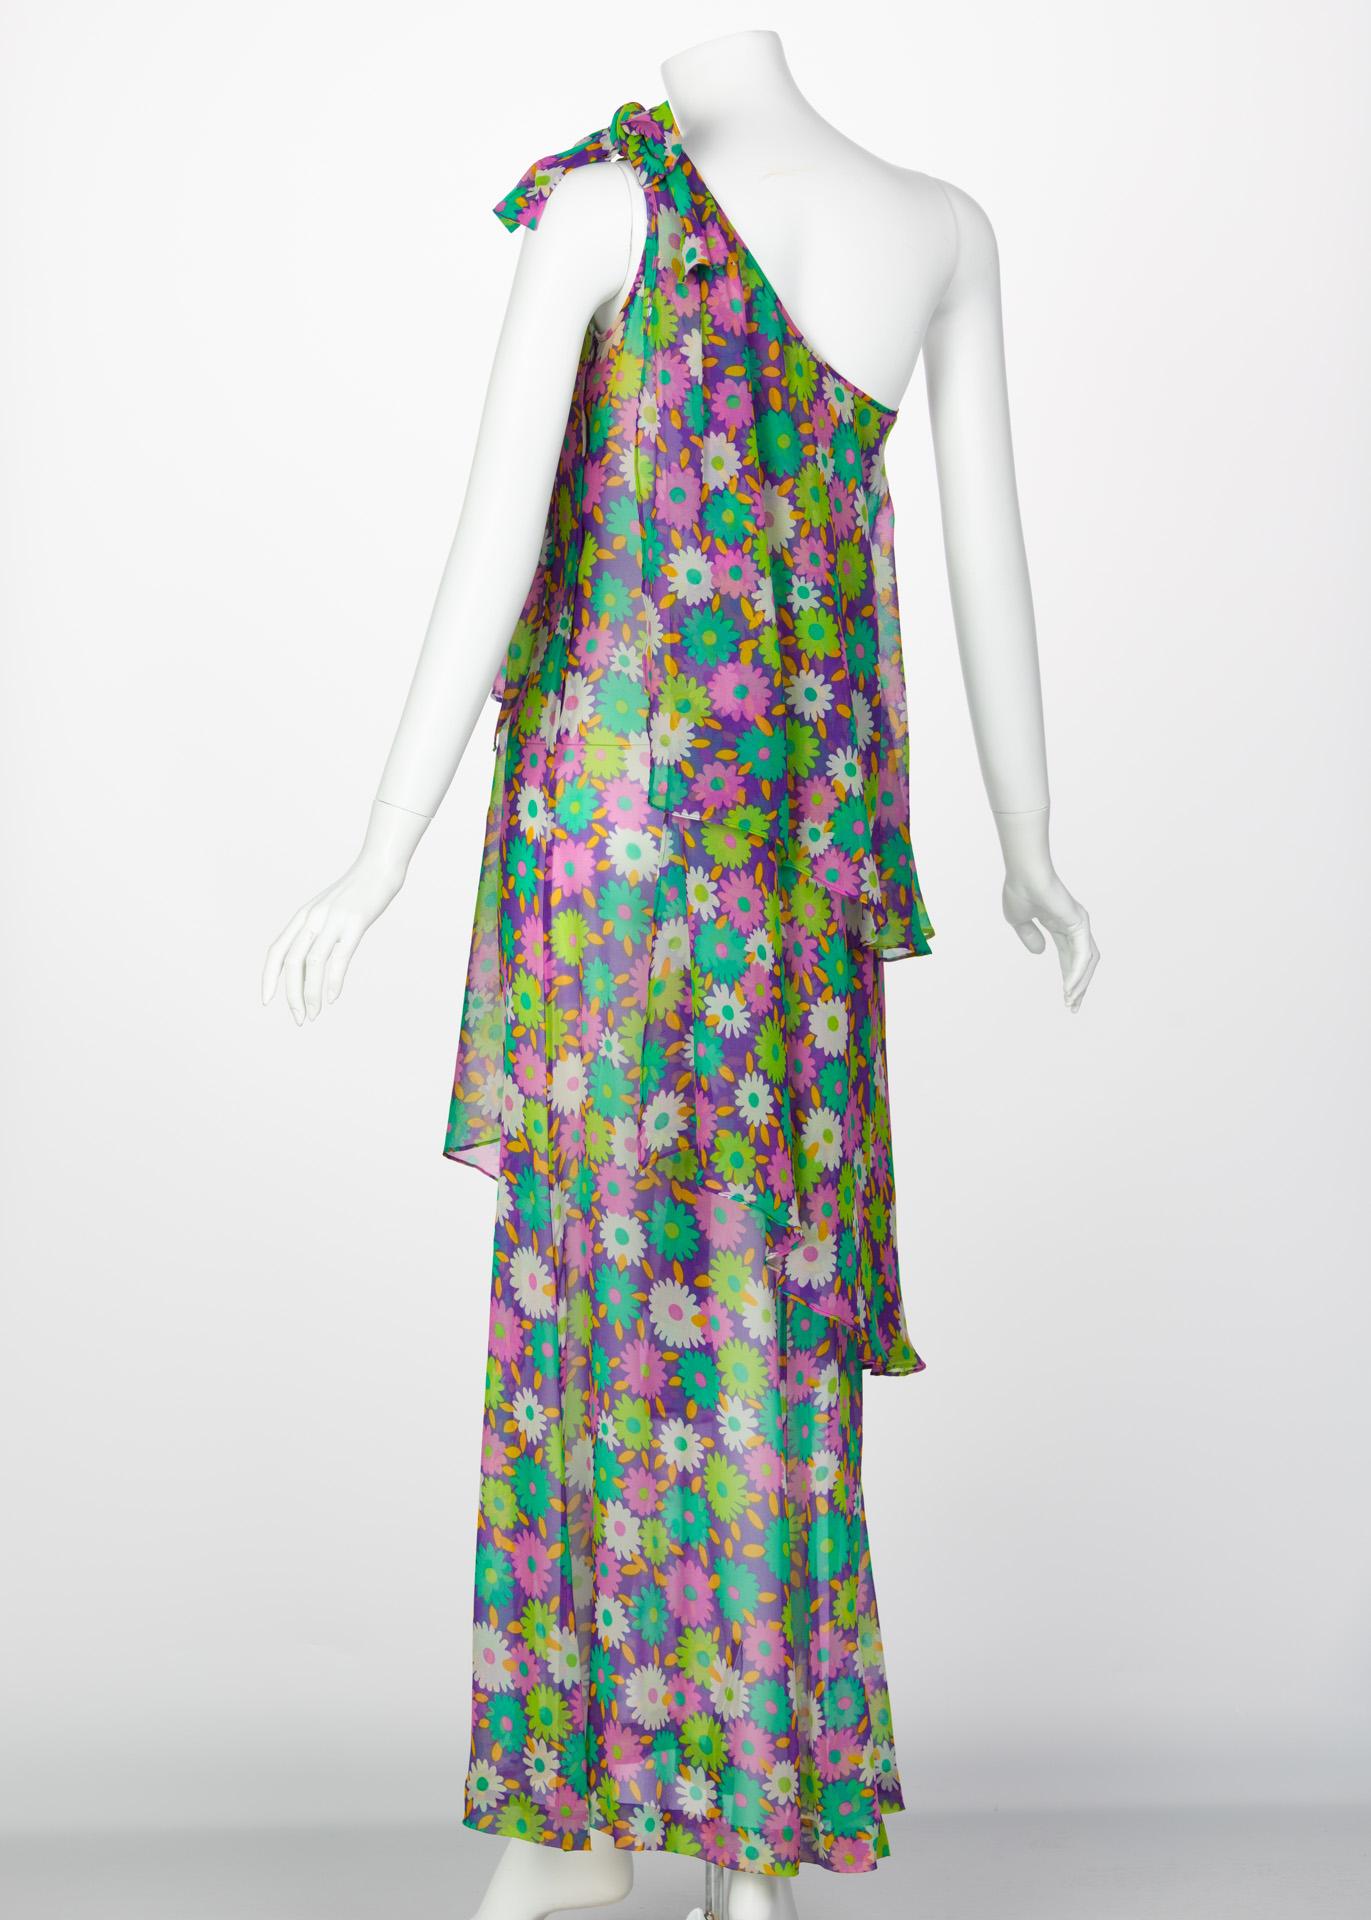 Yves Saint Laurent Multi-Color Floral One Shoulder Layered Silk Dress YSL, 1970s 1